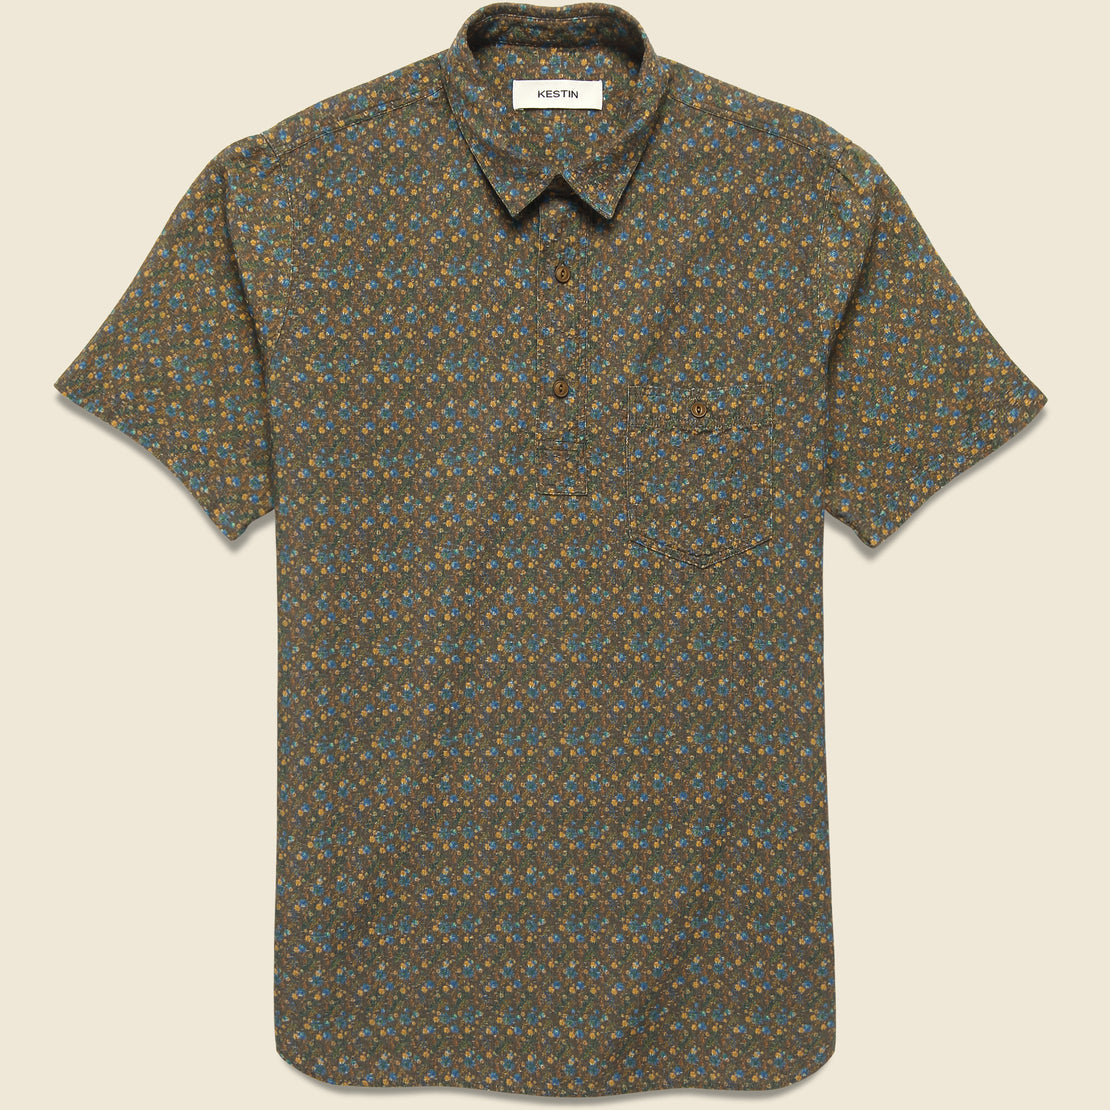 Kestin Granton Shirt - Olive Thistle Print